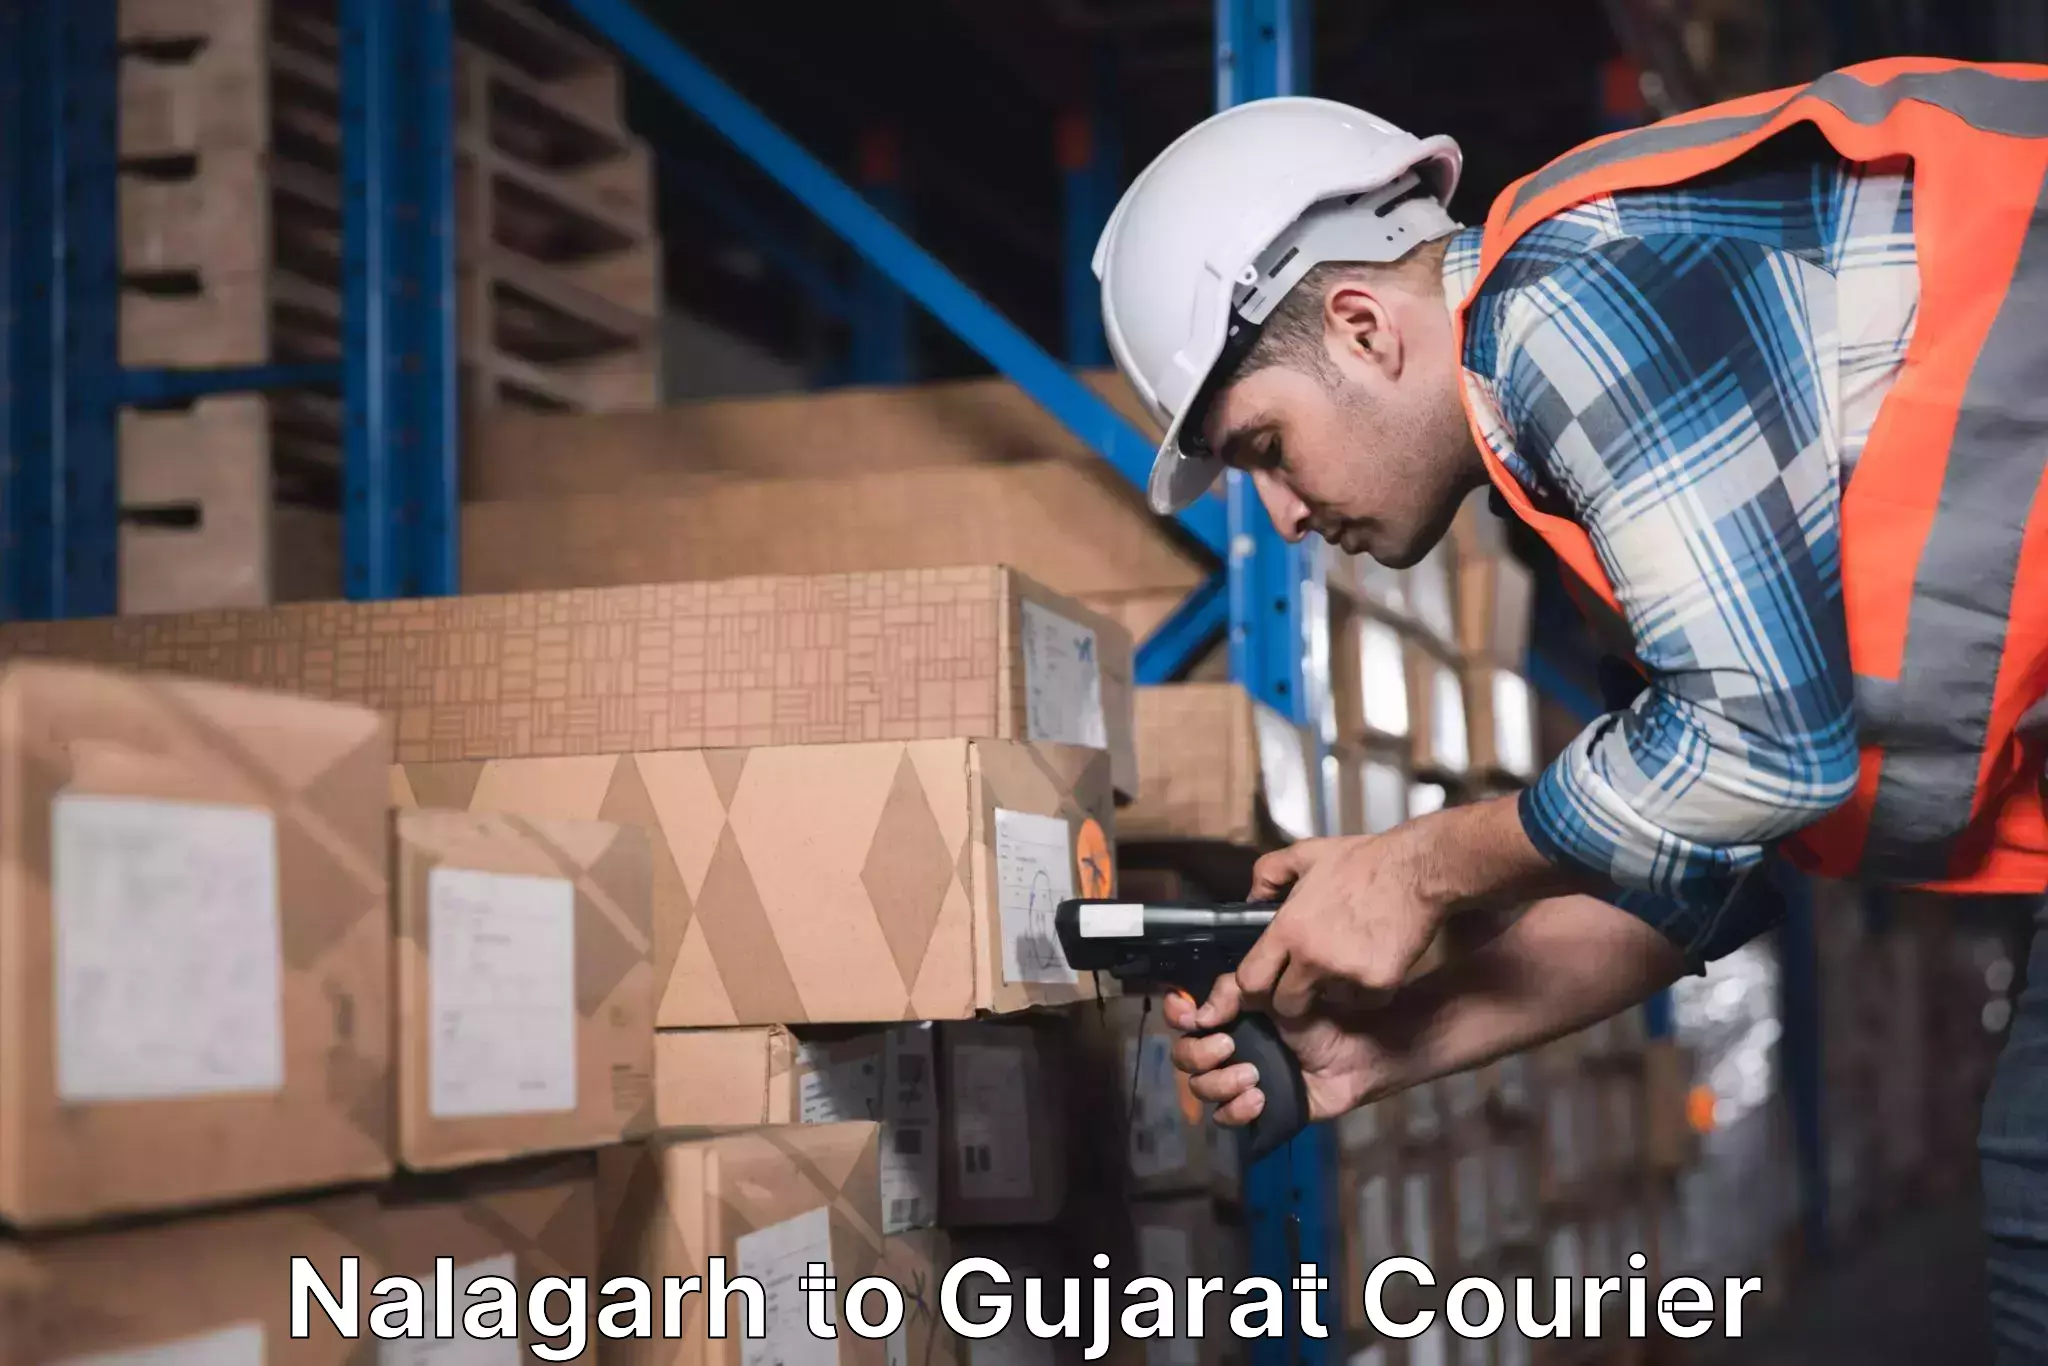 Global shipping networks Nalagarh to Gandhinagar